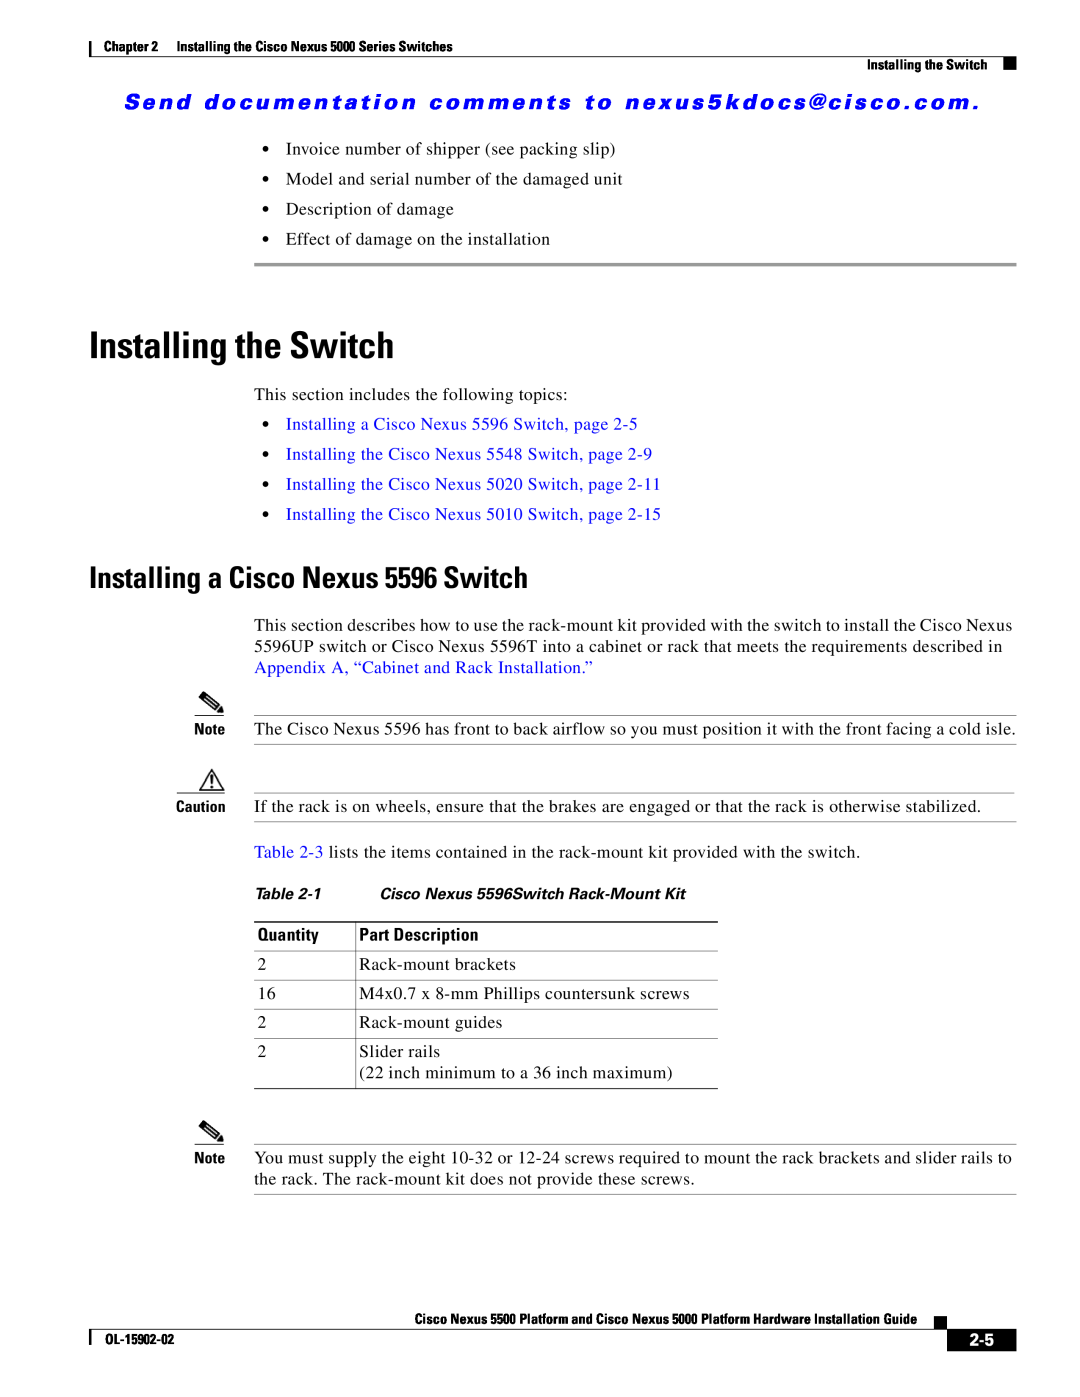 Cisco Systems 5000 manual Installing a Cisco Nexus 5596 Switch, page, Installing the Cisco Nexus 5548 Switch, page 